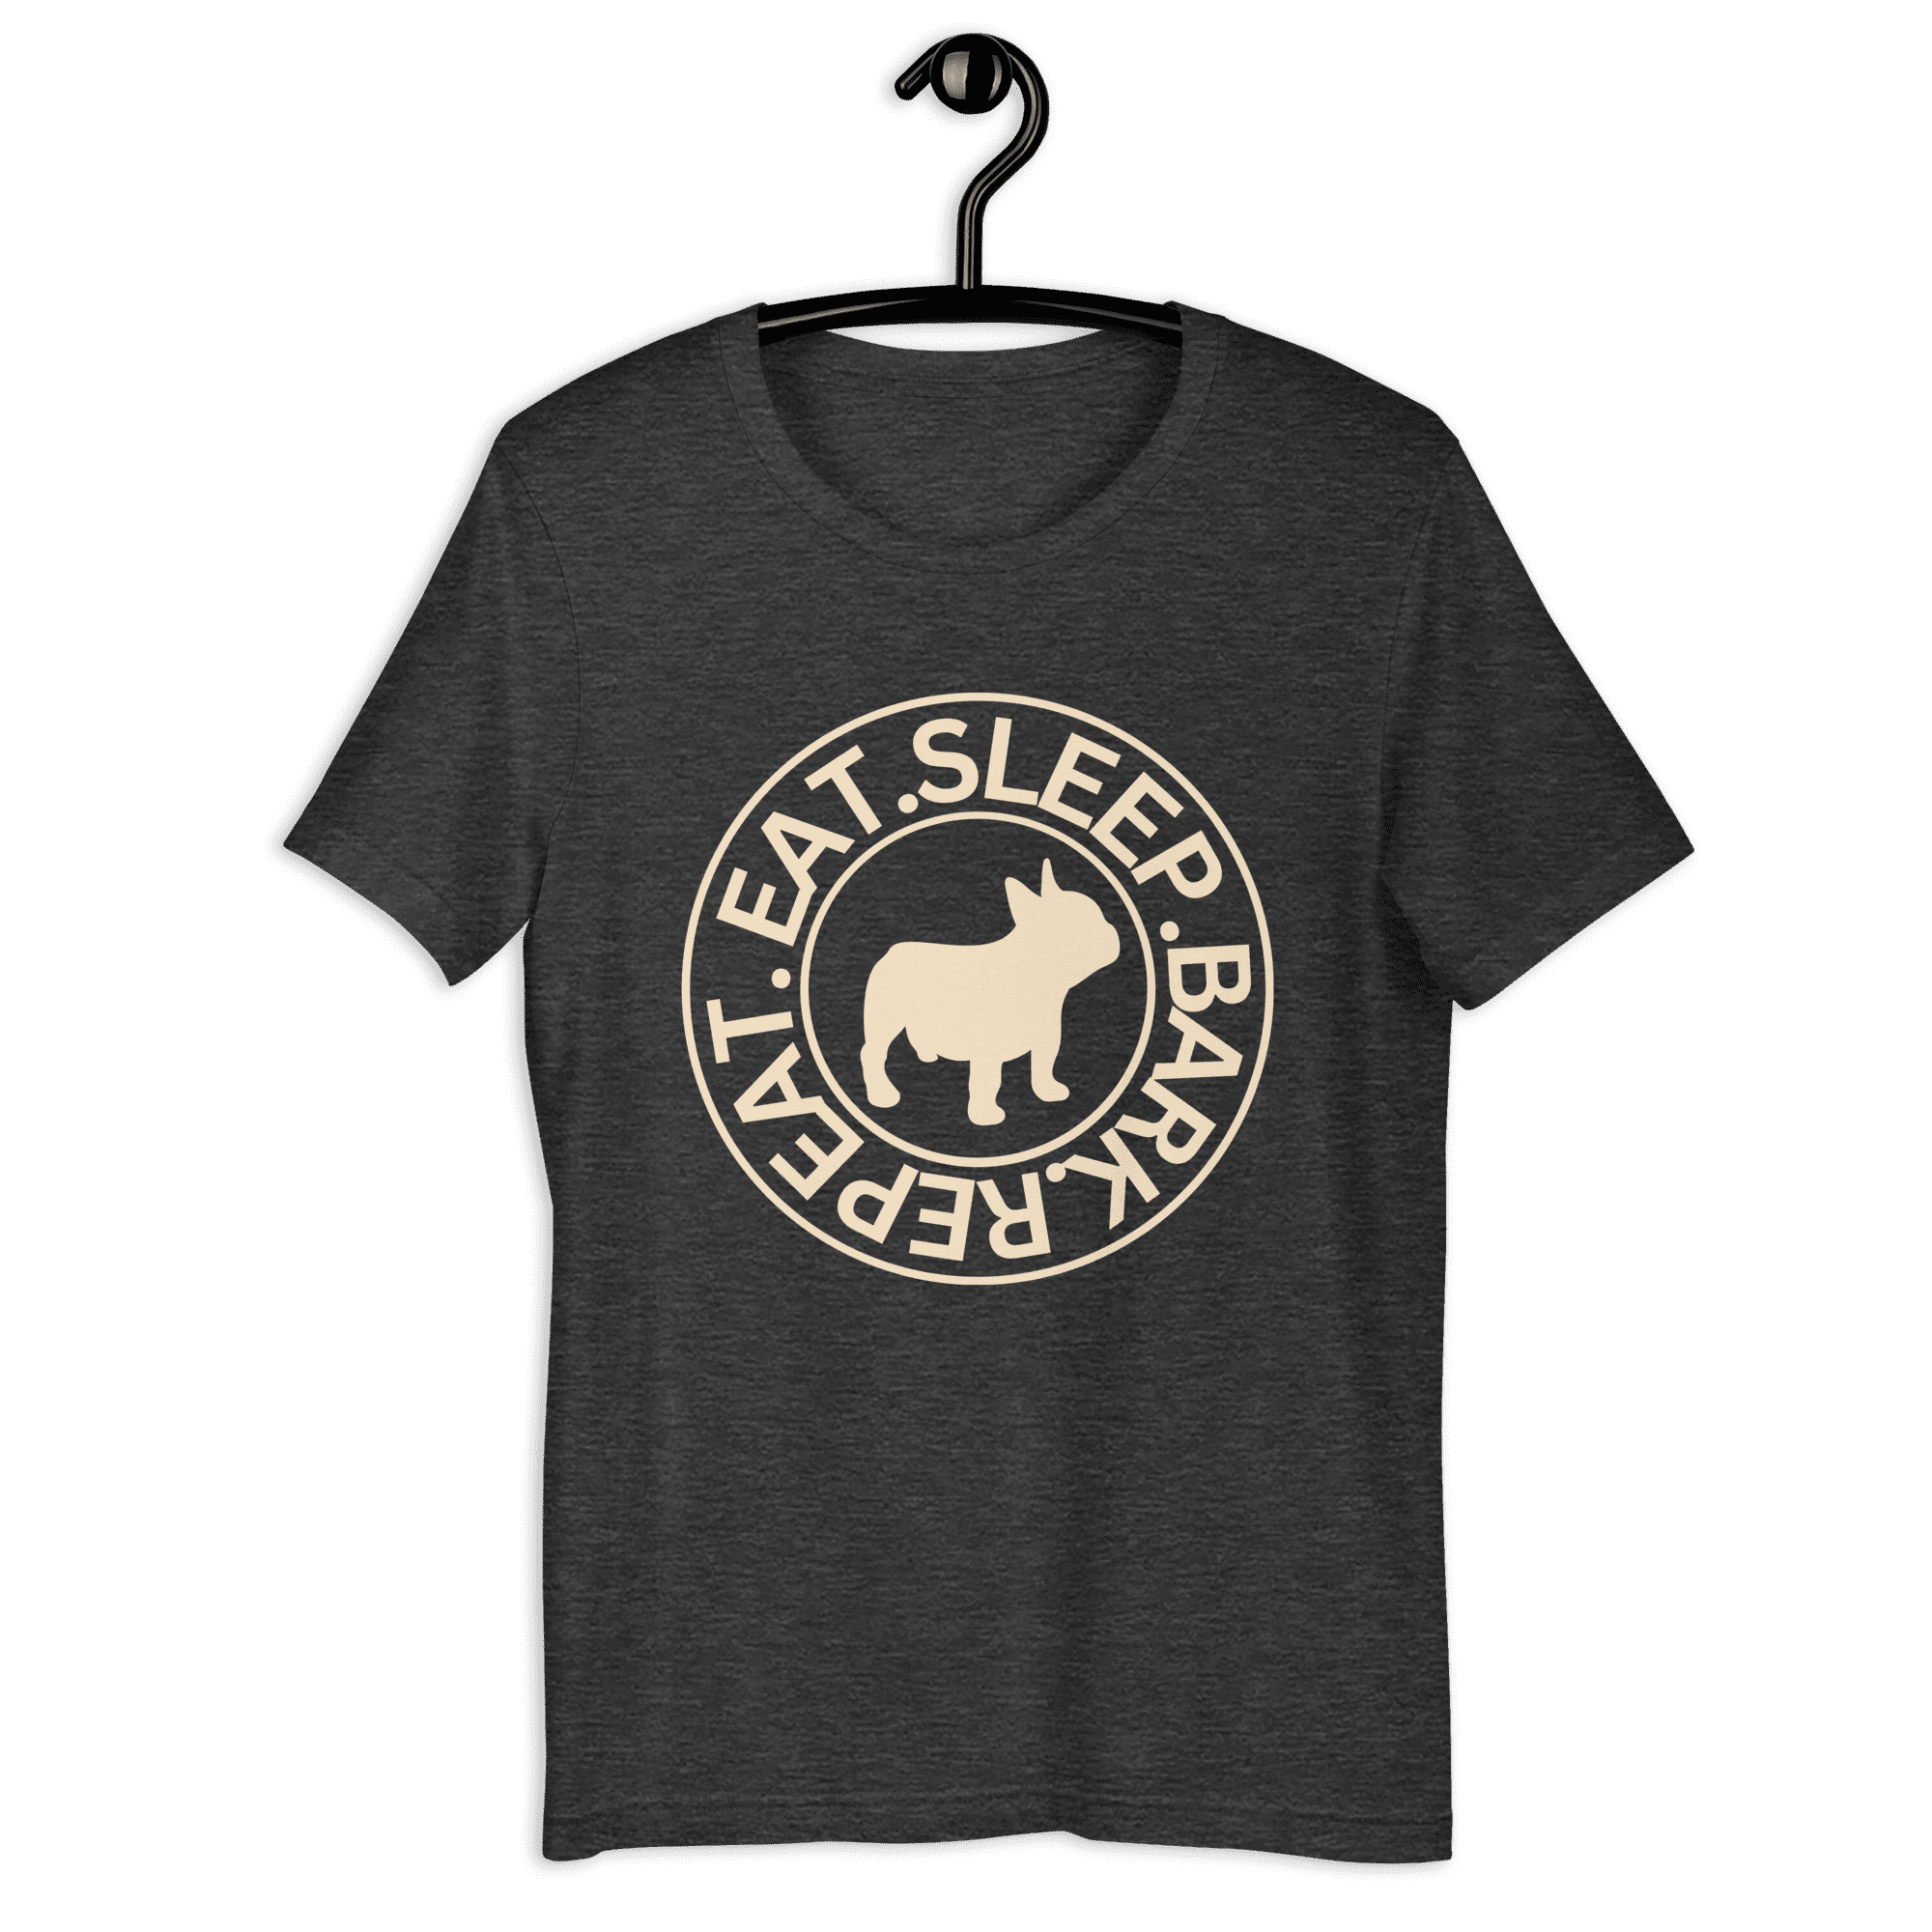 The "Eat Sleep Bark Repeat" French Bulldog Unisex T-Shirt. Dark Grey